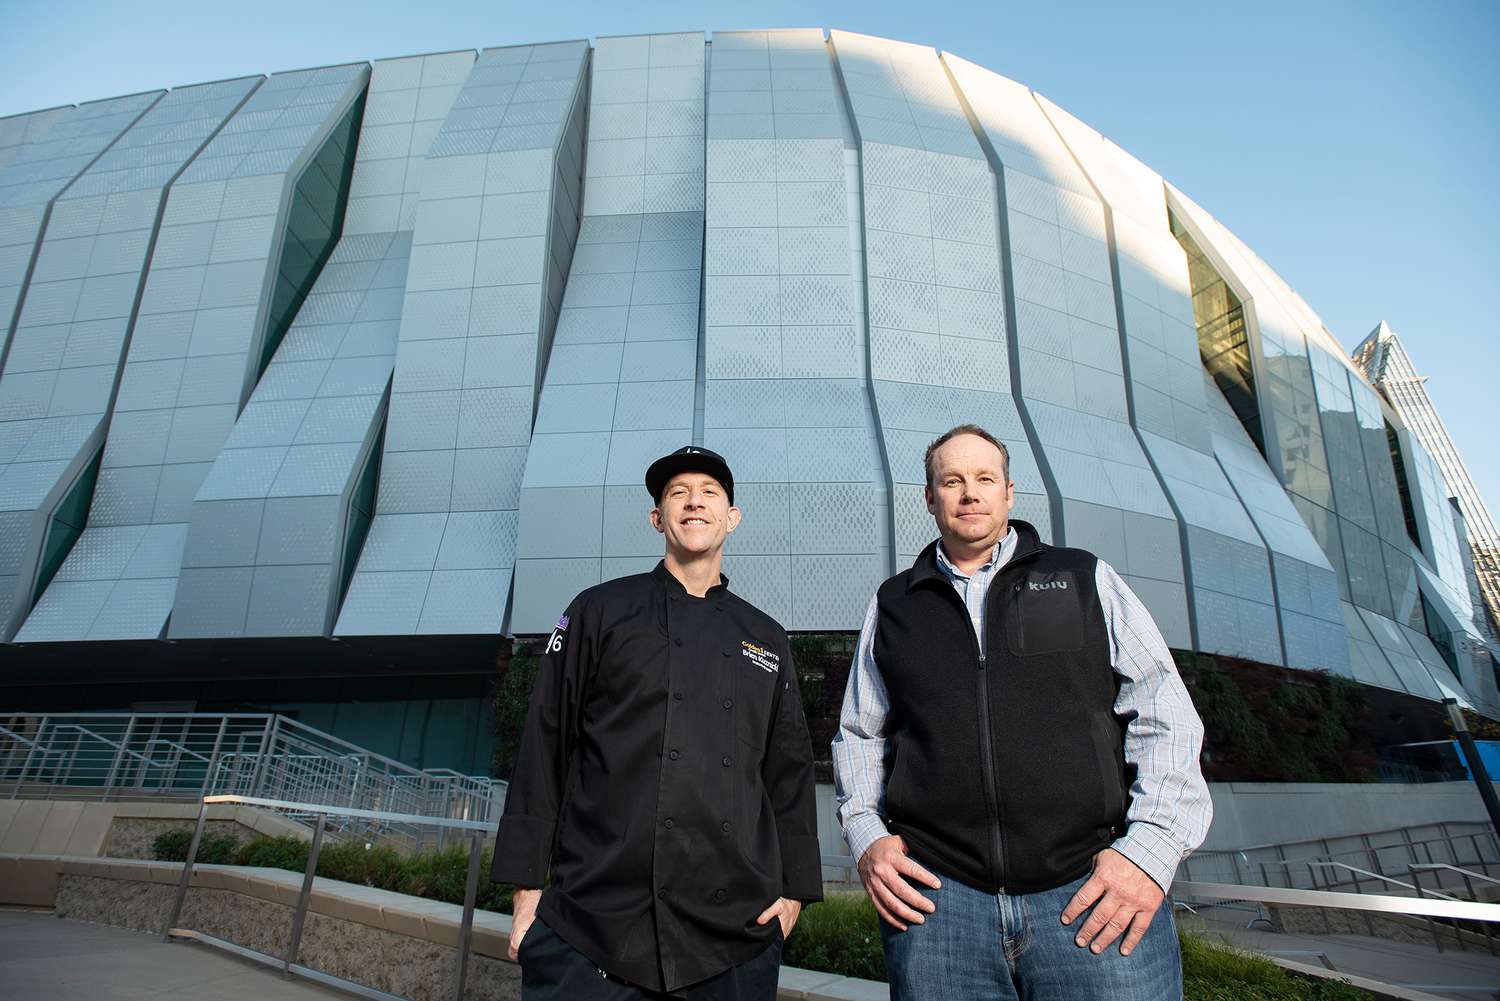 Executive chef Brien Kuznicki (left) and farmer Michael Bosworth at Sacramento’s Golden 1 Center.